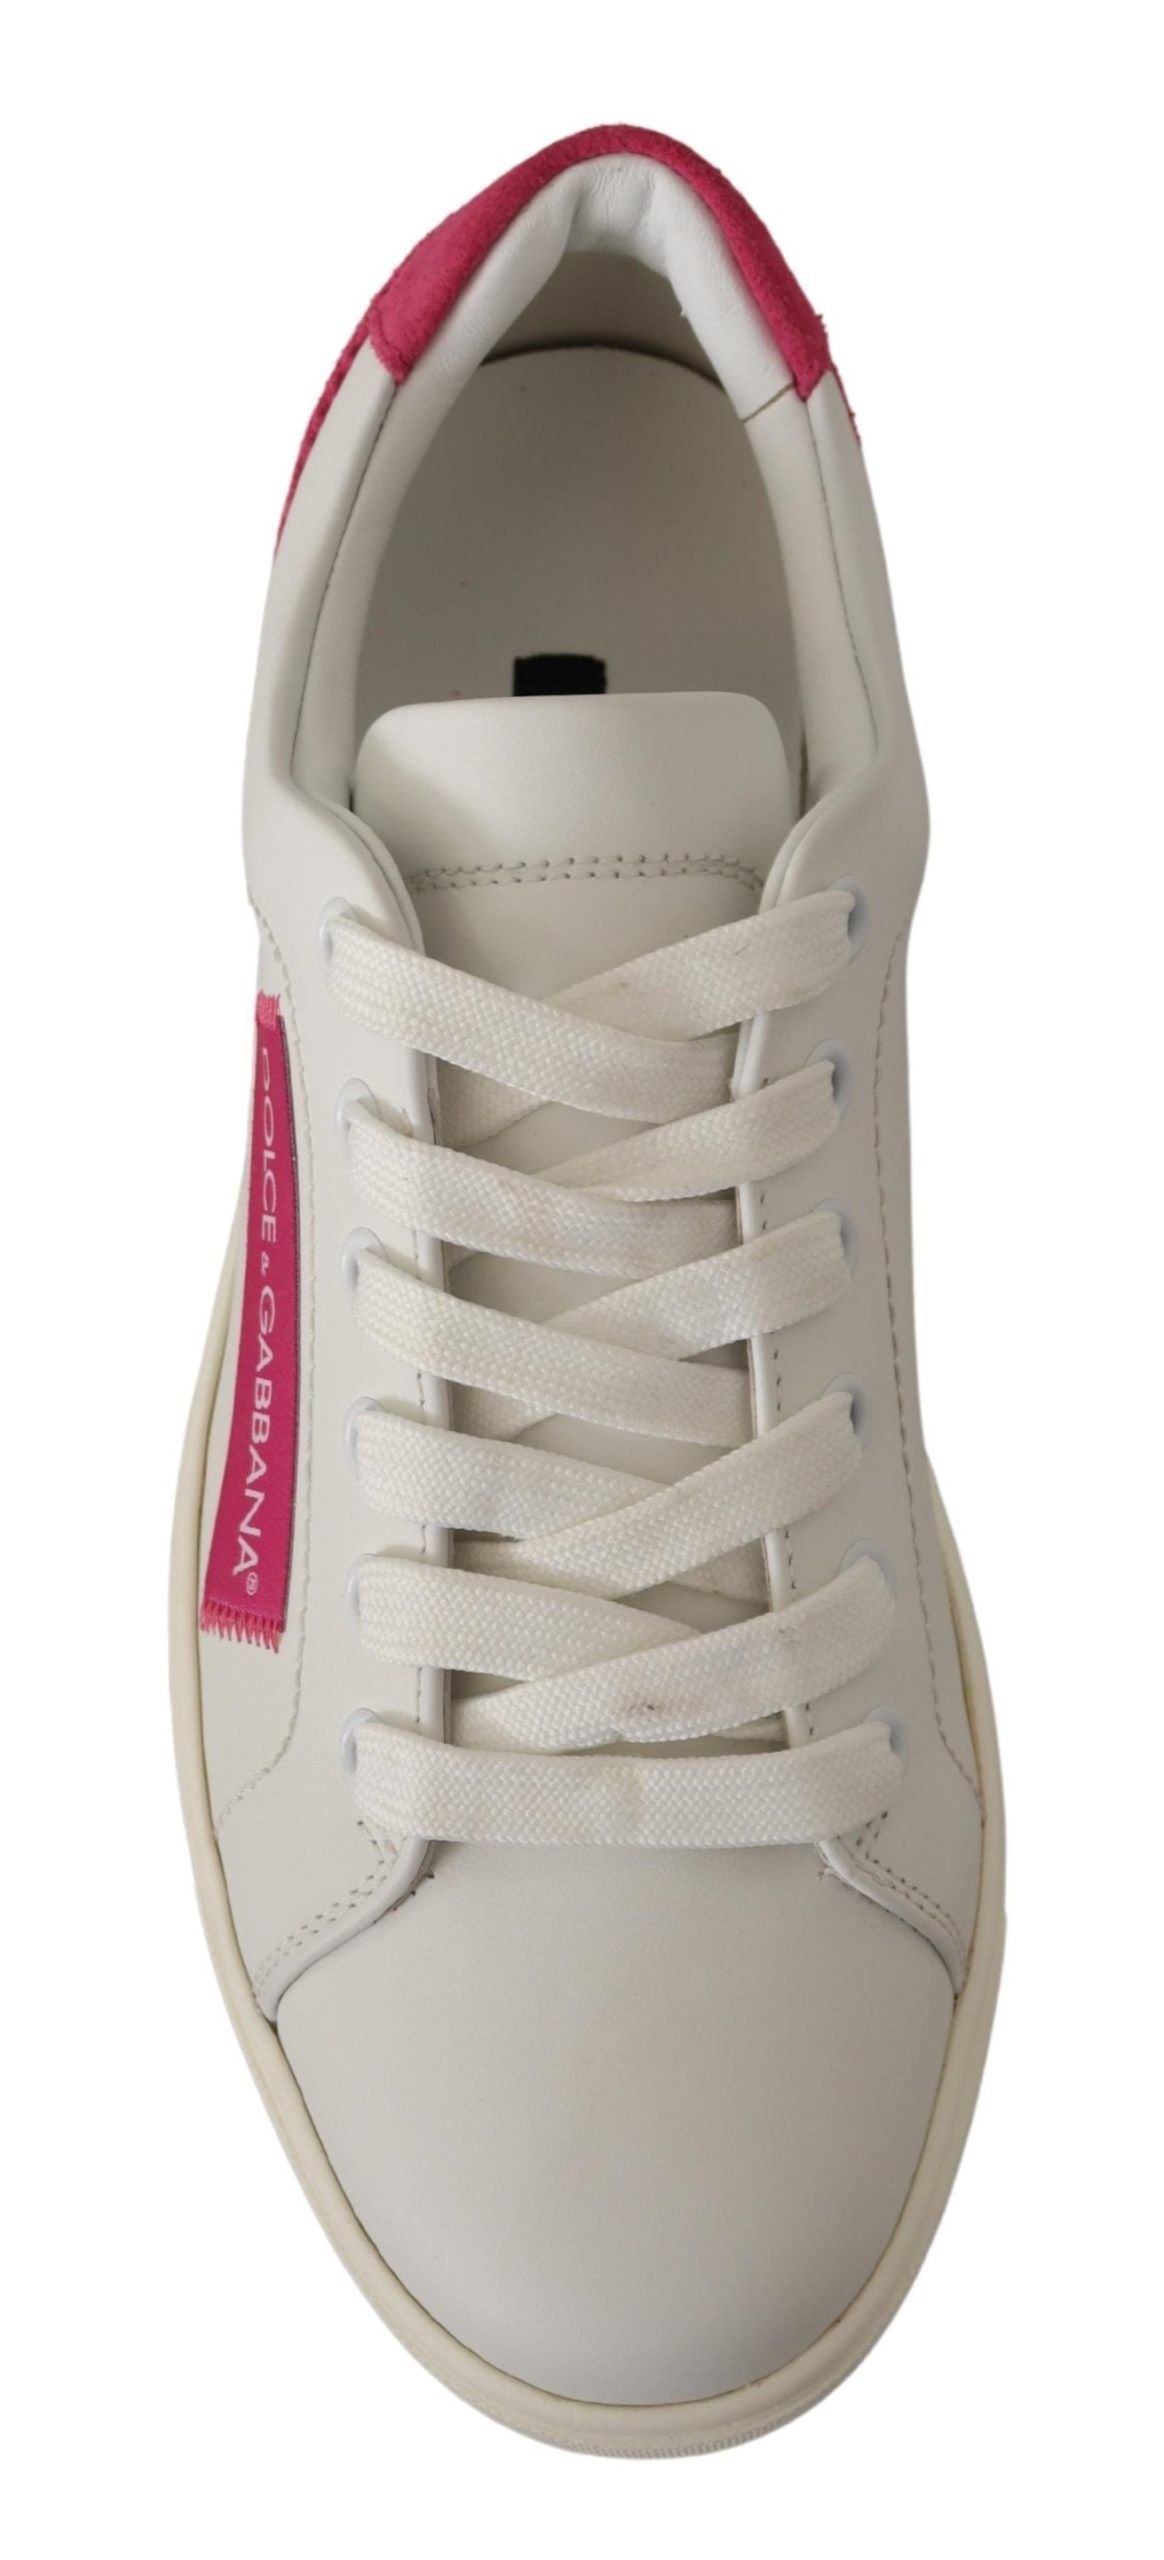 Dolce & Gabbana White Rosa Pink Basso Top Sneakers Scarpe da donna